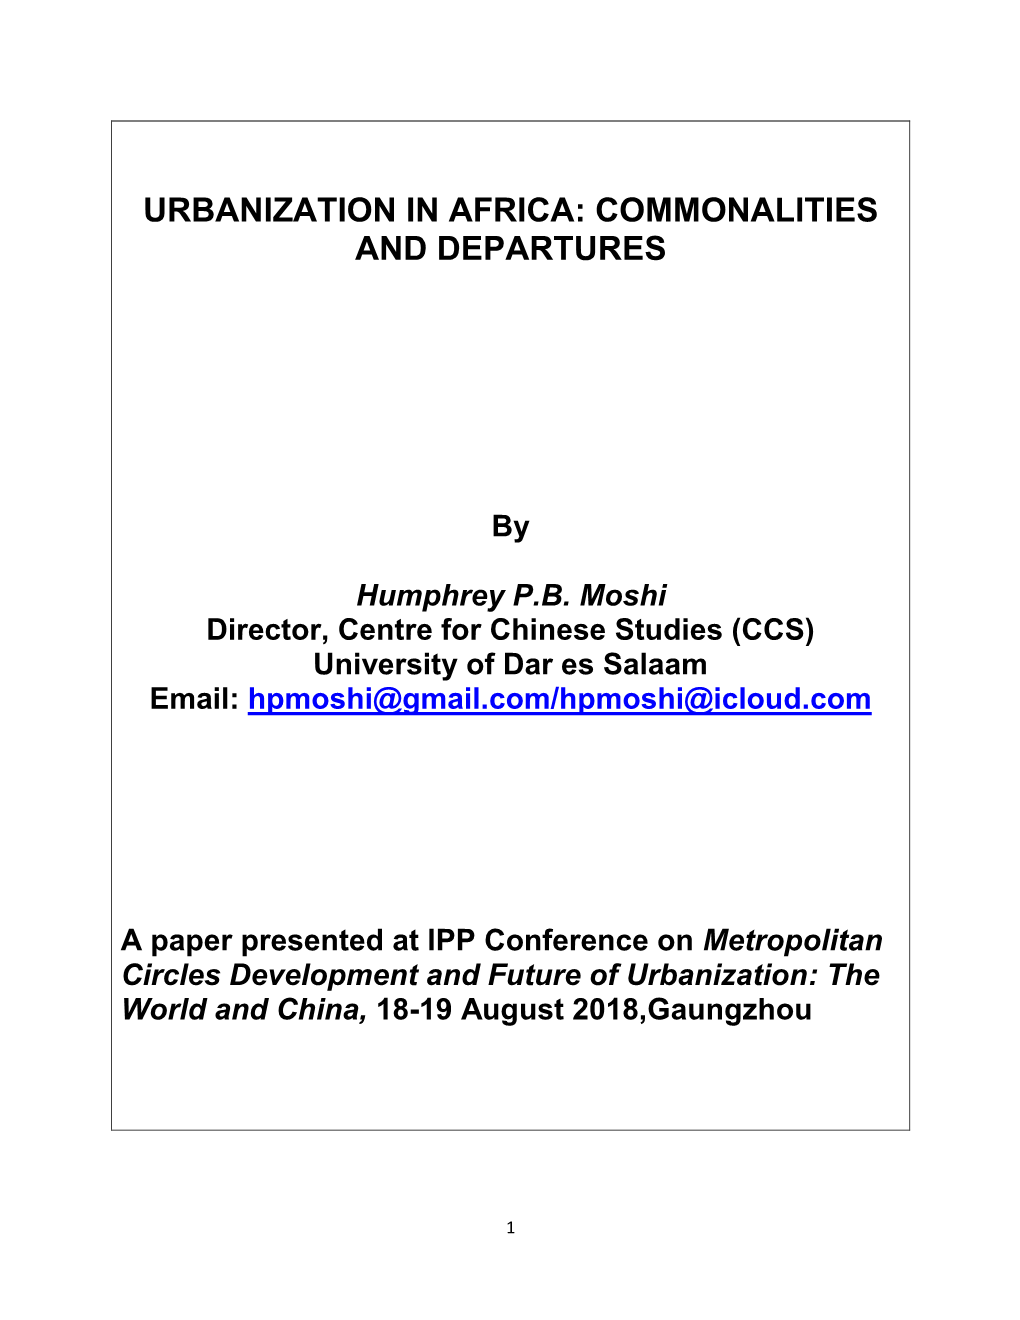 Urbanization in Africa: Commonalities and Departures